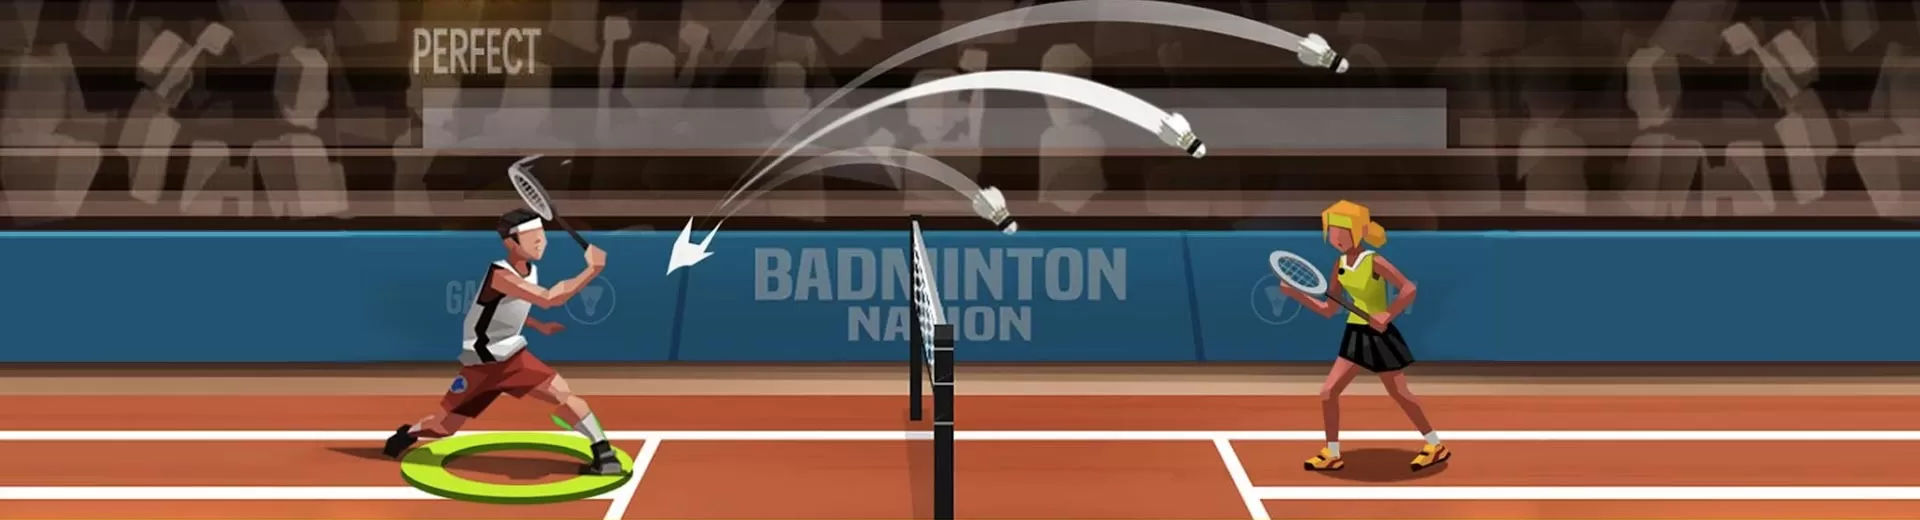 Badminton League Emulator Pc